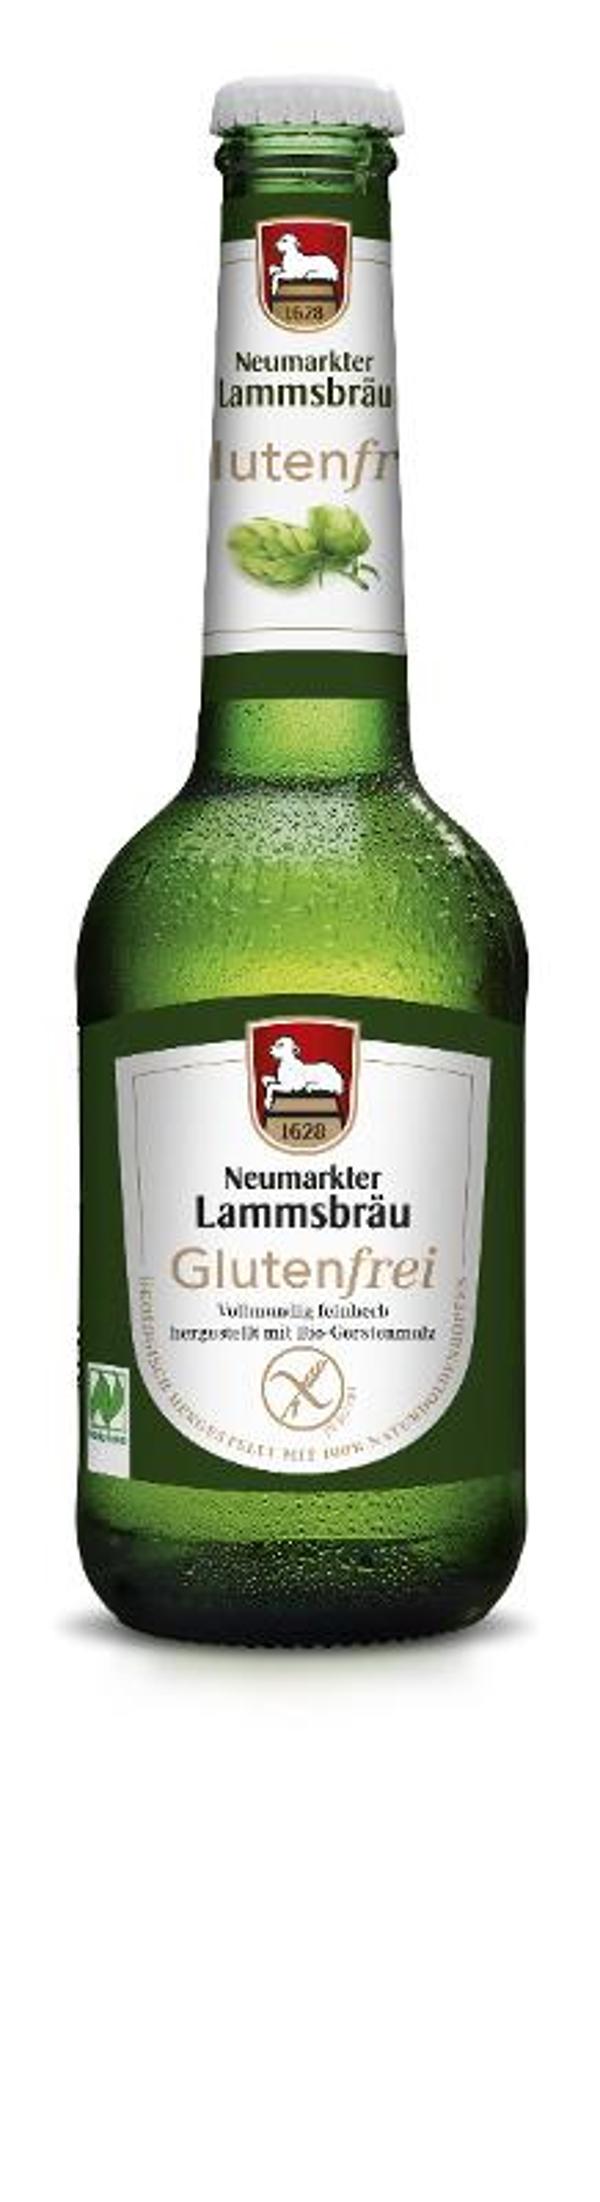 Produktfoto zu Lammsbräu glutenfrei